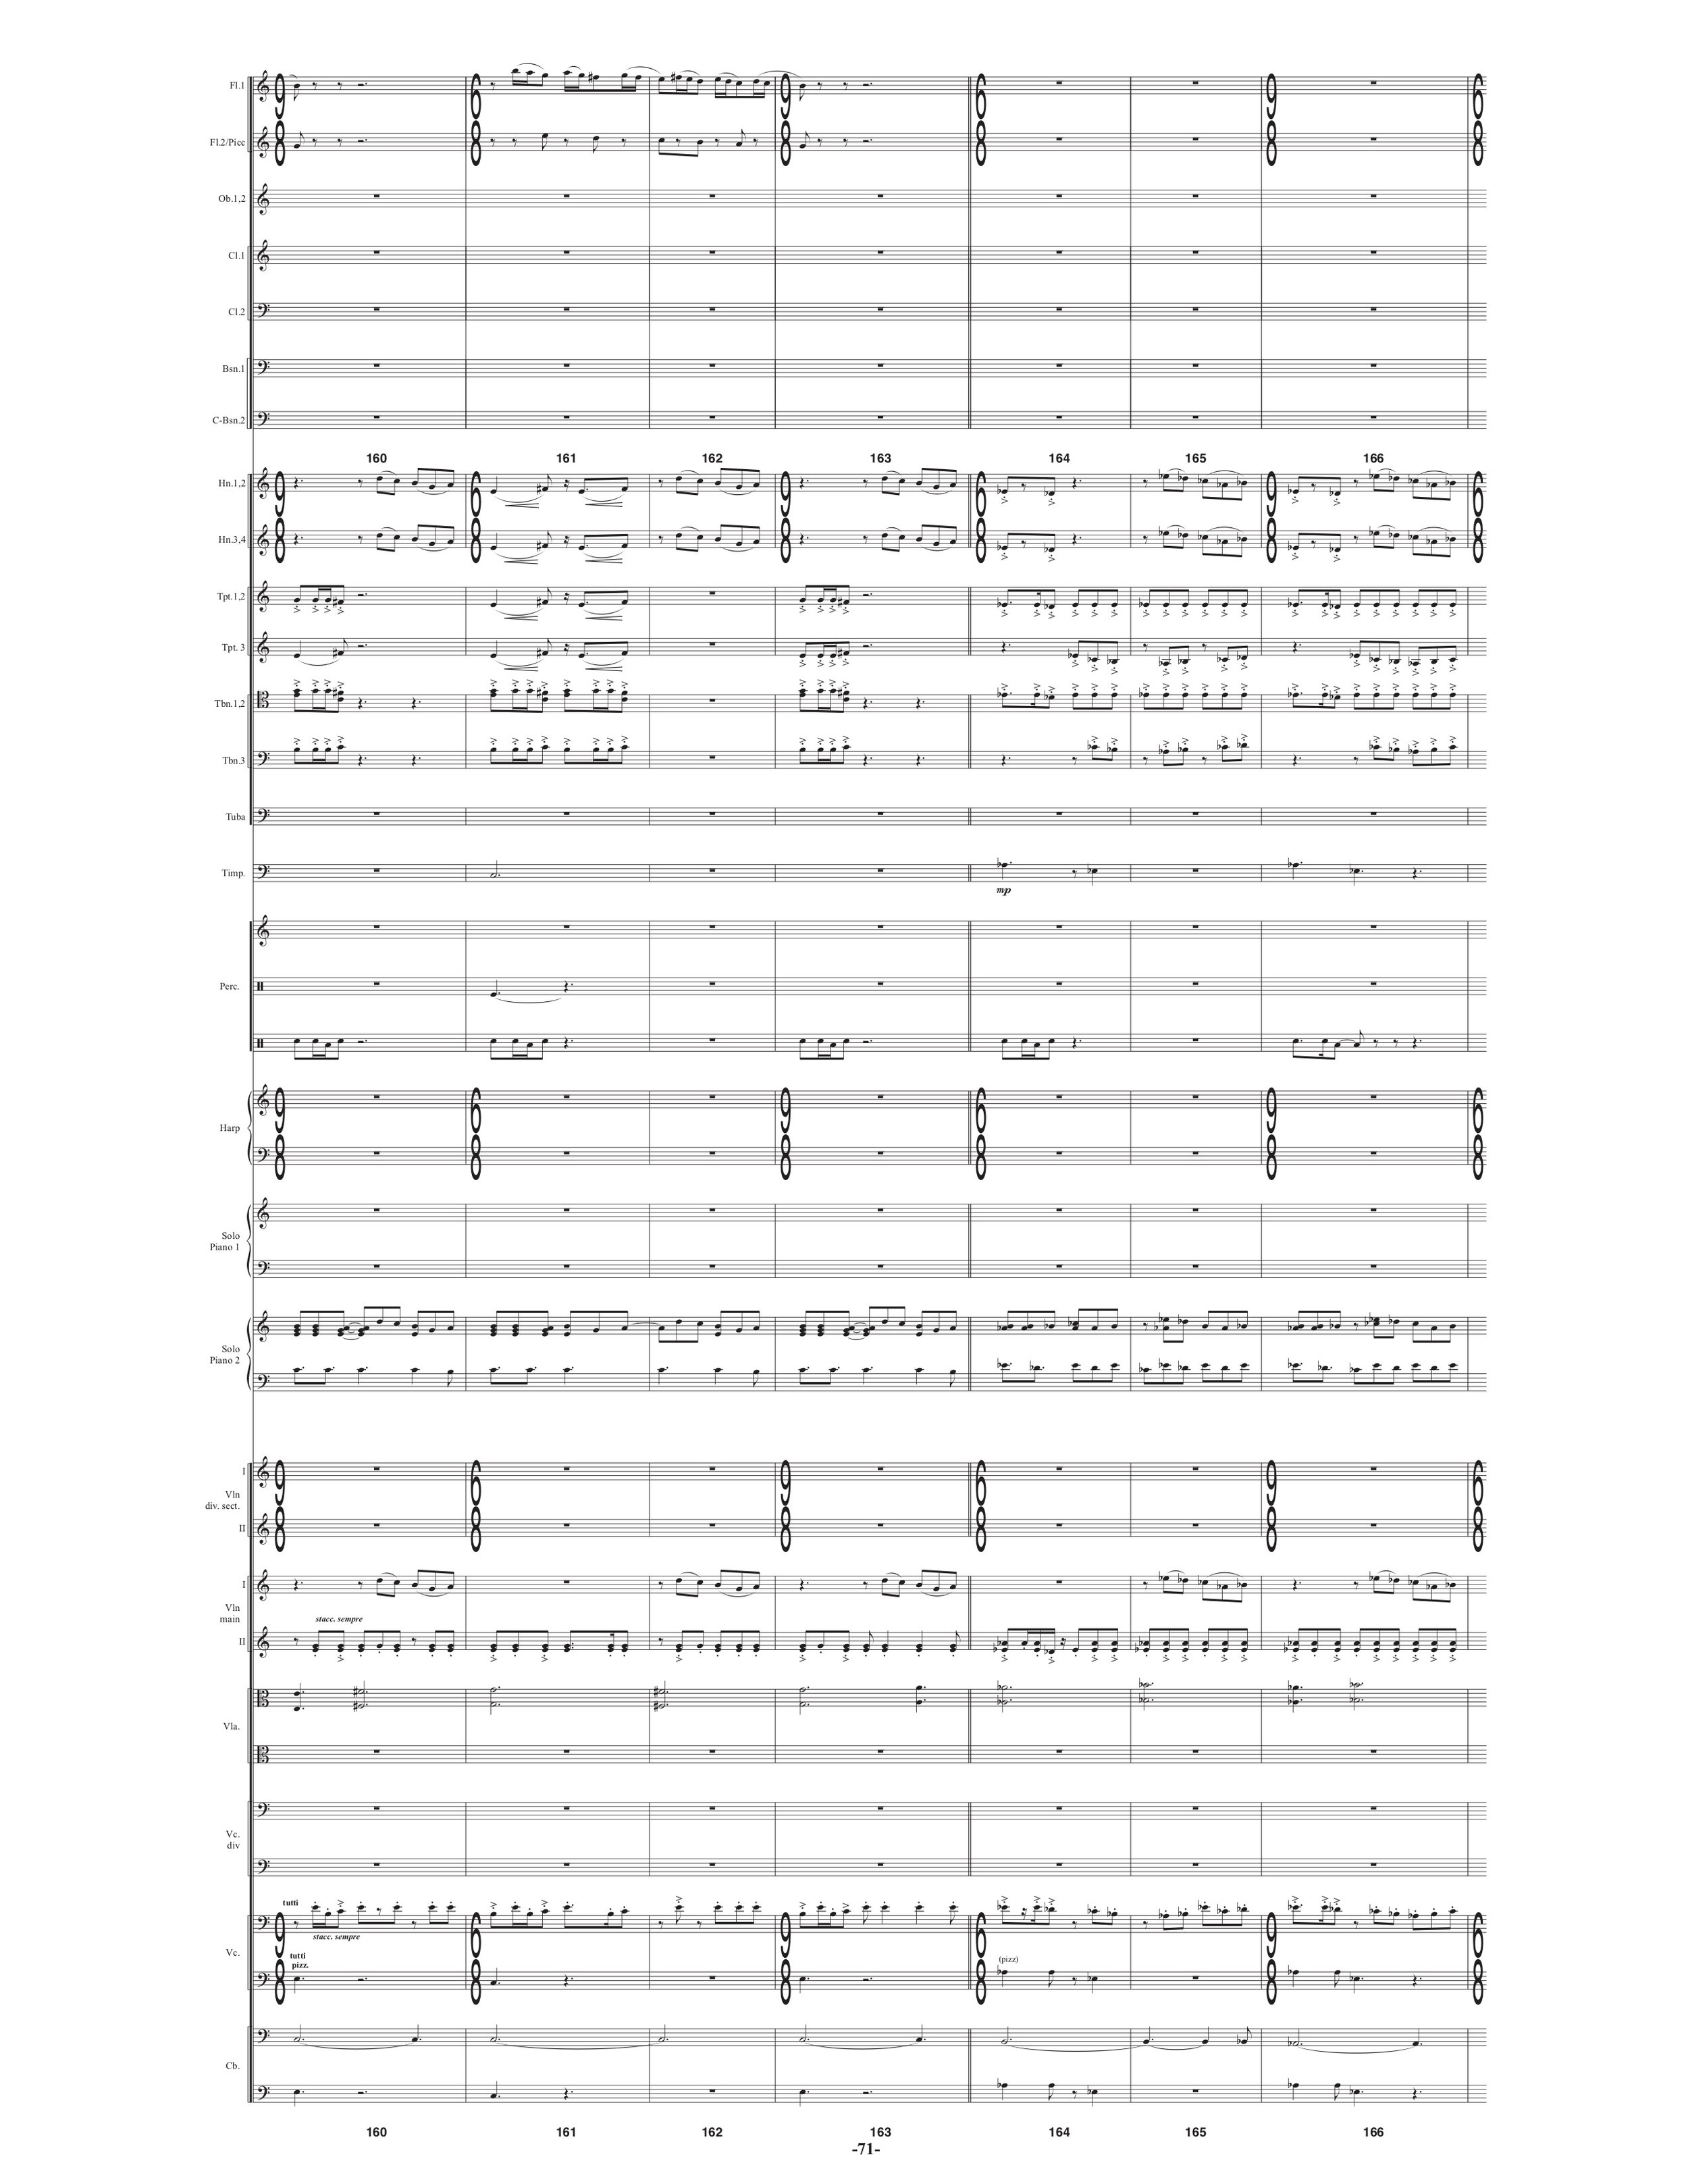 Symphony_Orch & 2 Pianos p76.jpg